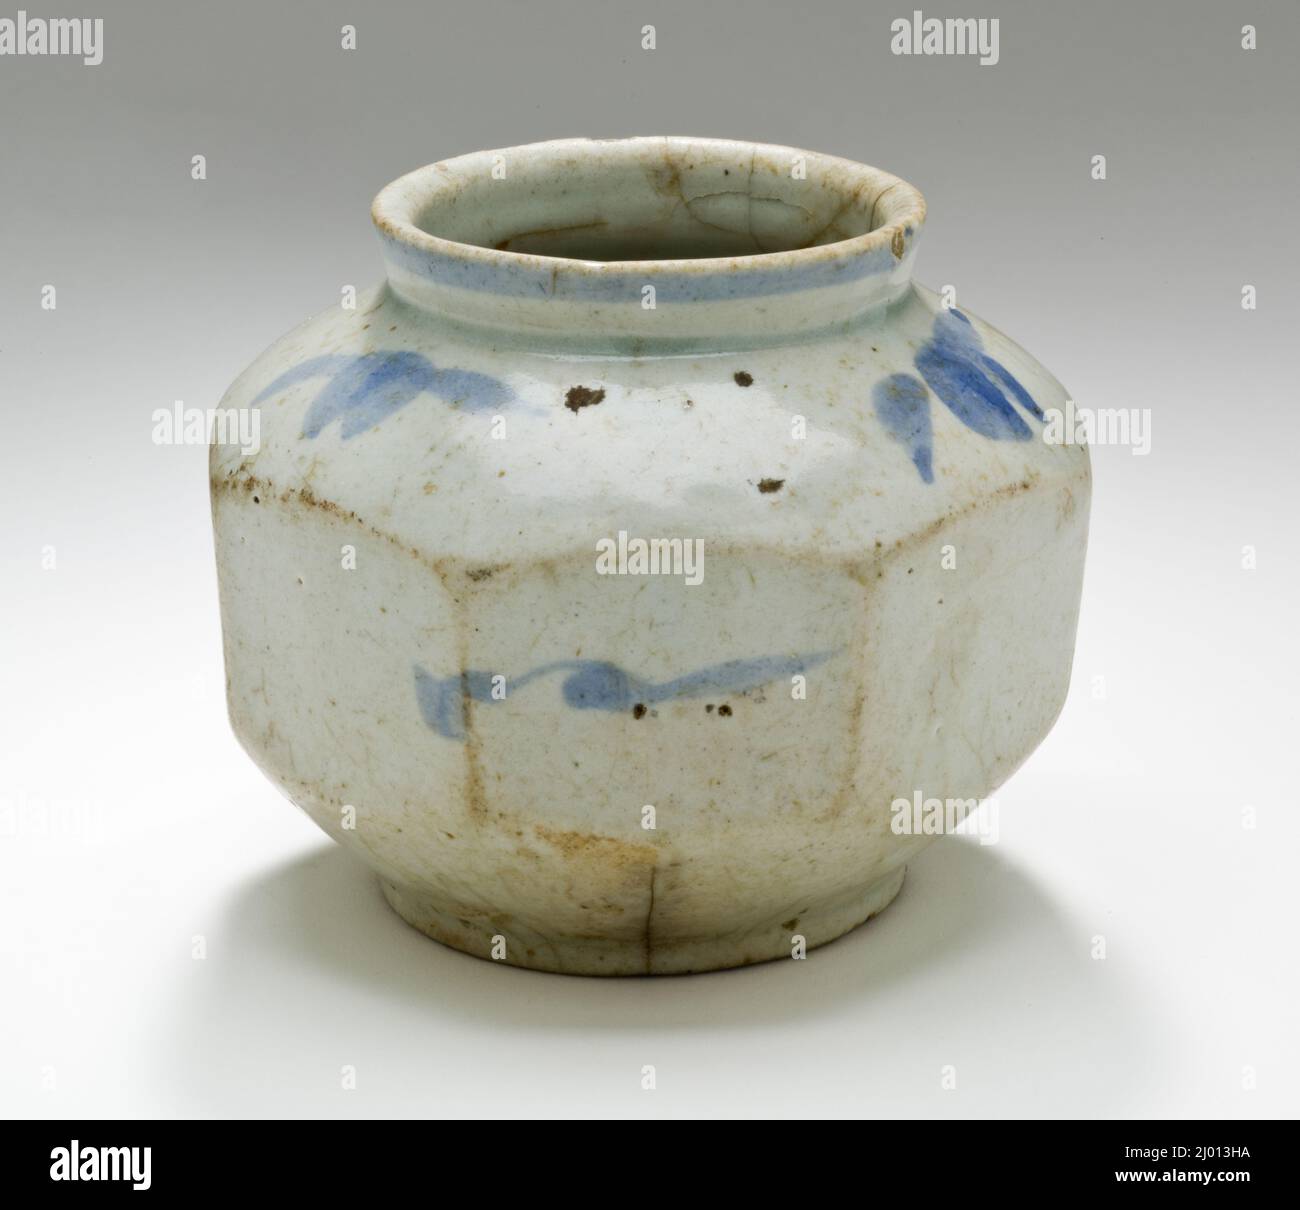 https://c8.alamy.com/comp/2J013HA/faceted-jar-with-bamboo-sprays-korea-korean-joseon-dynasty-1392-1910-18th-19th-century-furnishings-serviceware-stoneware-with-underglaze-blue-decoration-2J013HA.jpg